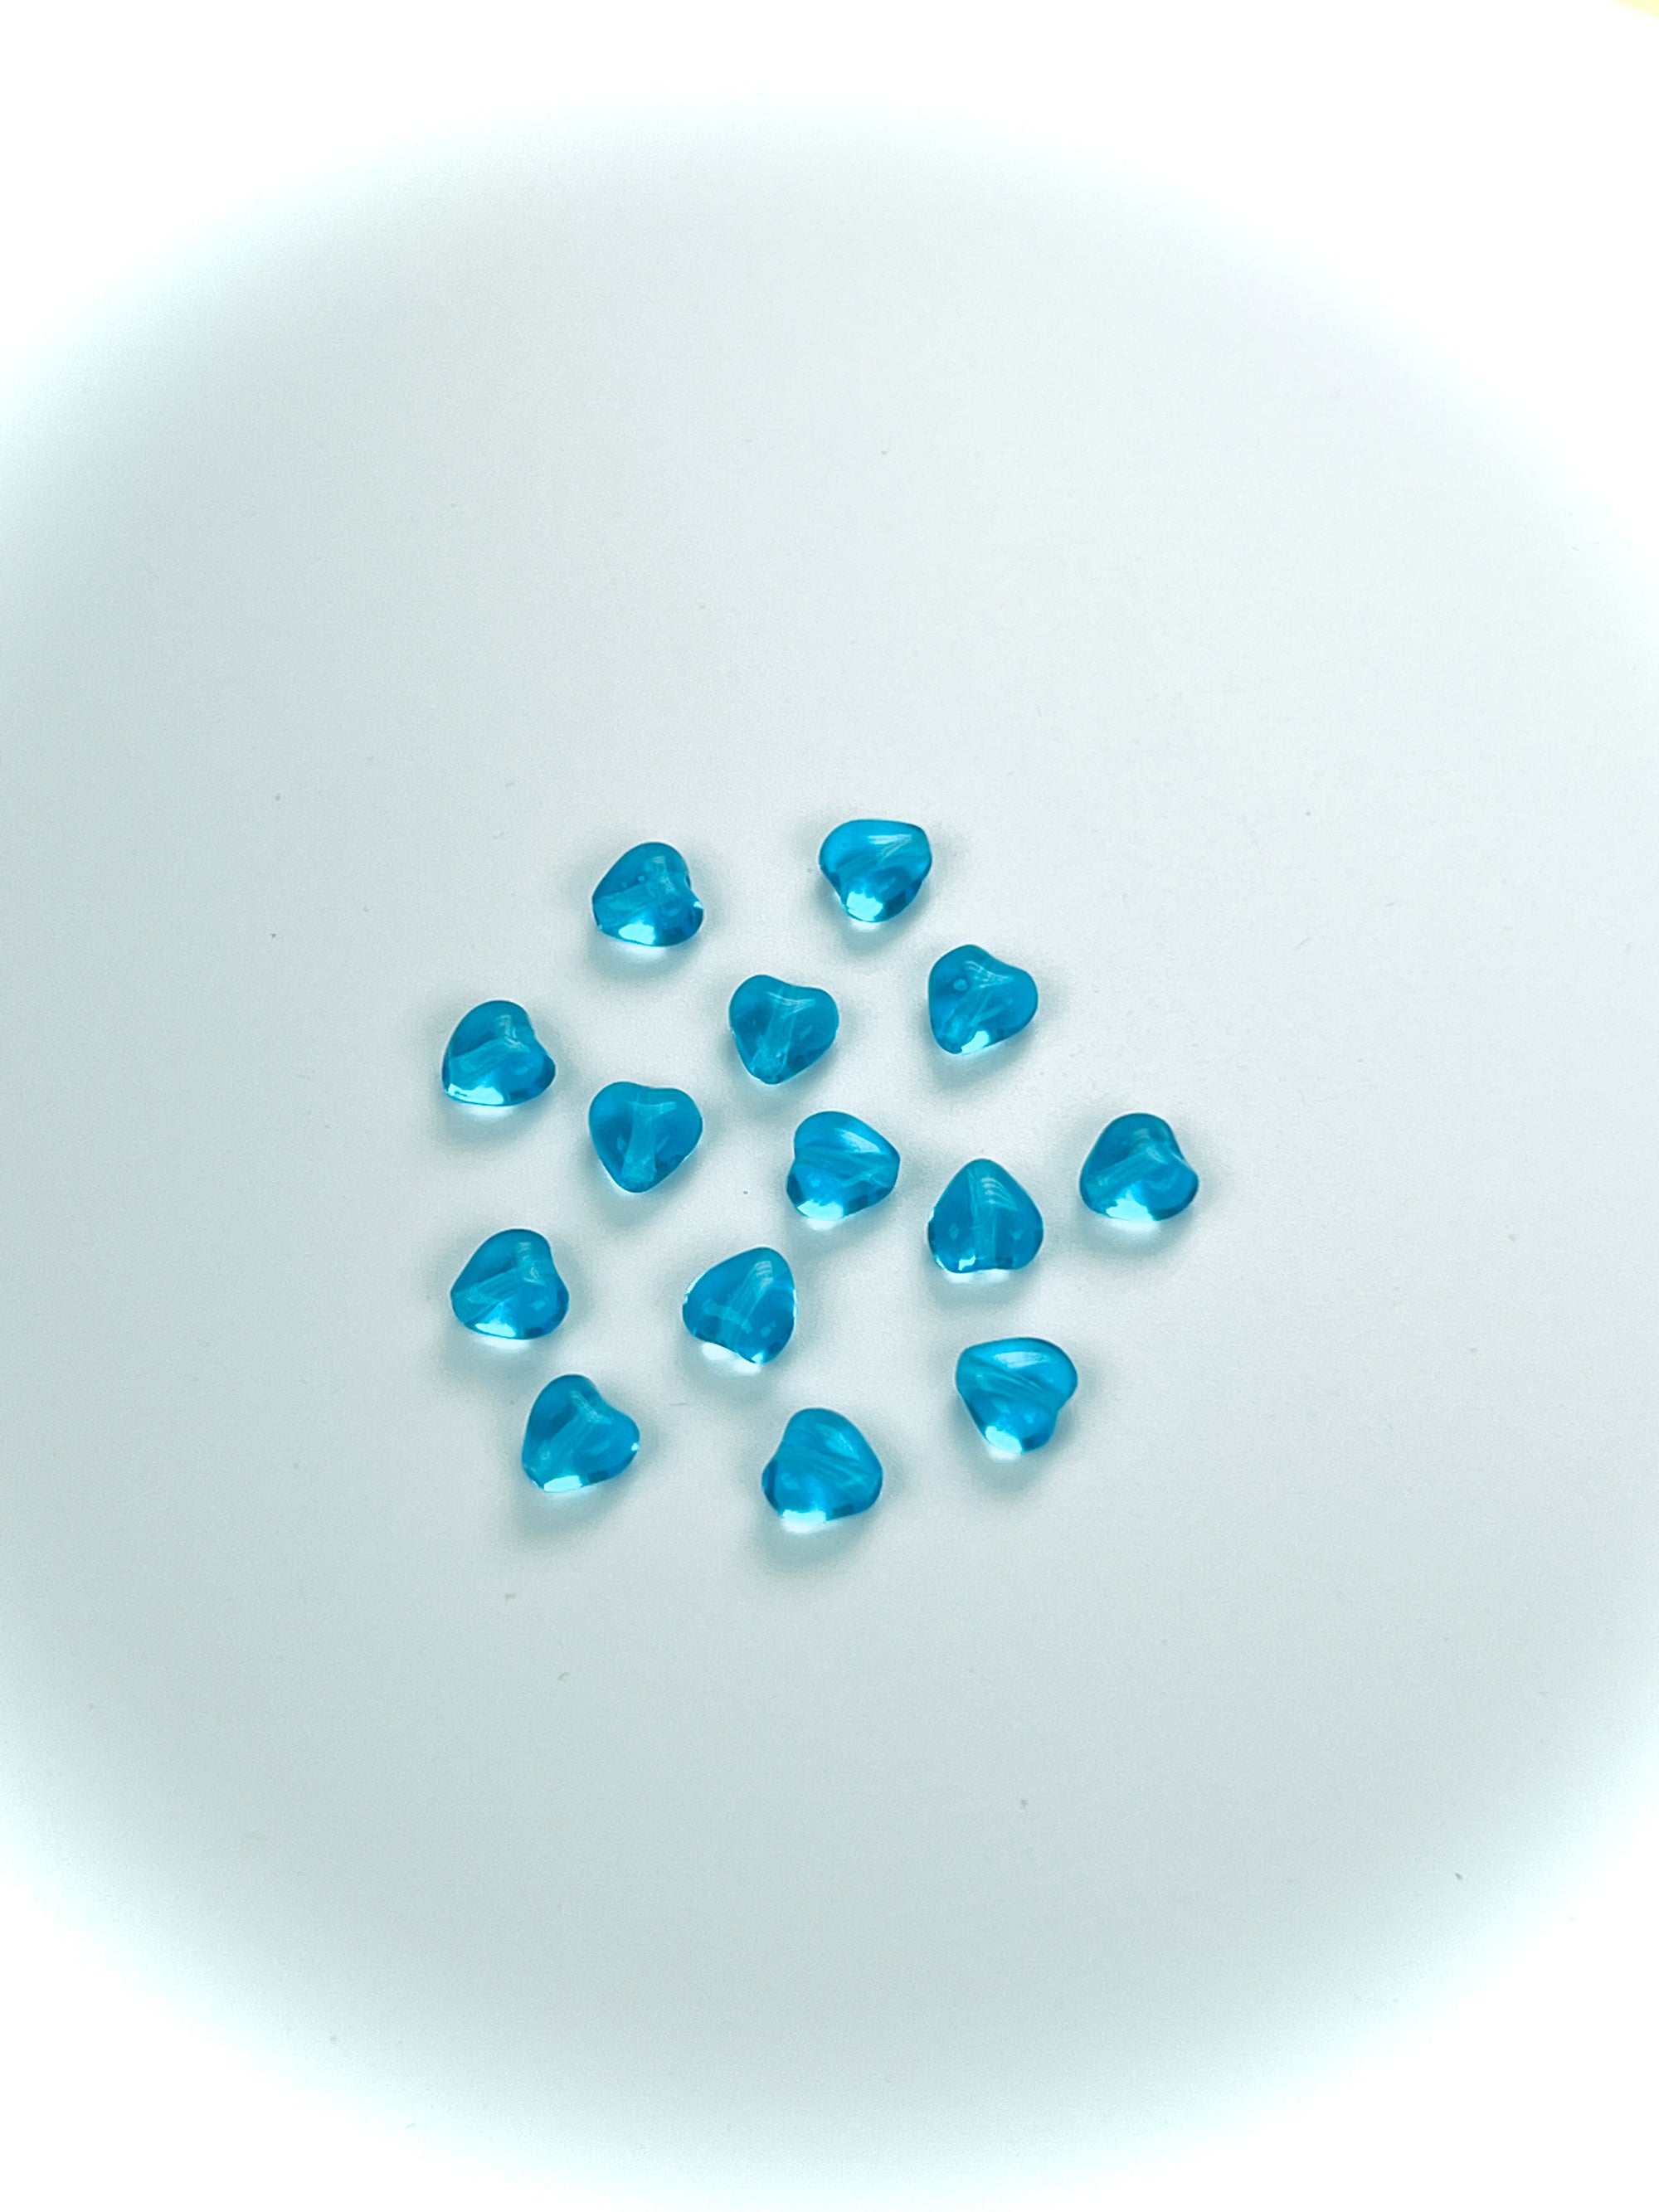 Czech glass Heart shaped druk beads 6x6mm Medium Aqua color, blue, Loose Pressed Beads, 50 pcs, J072